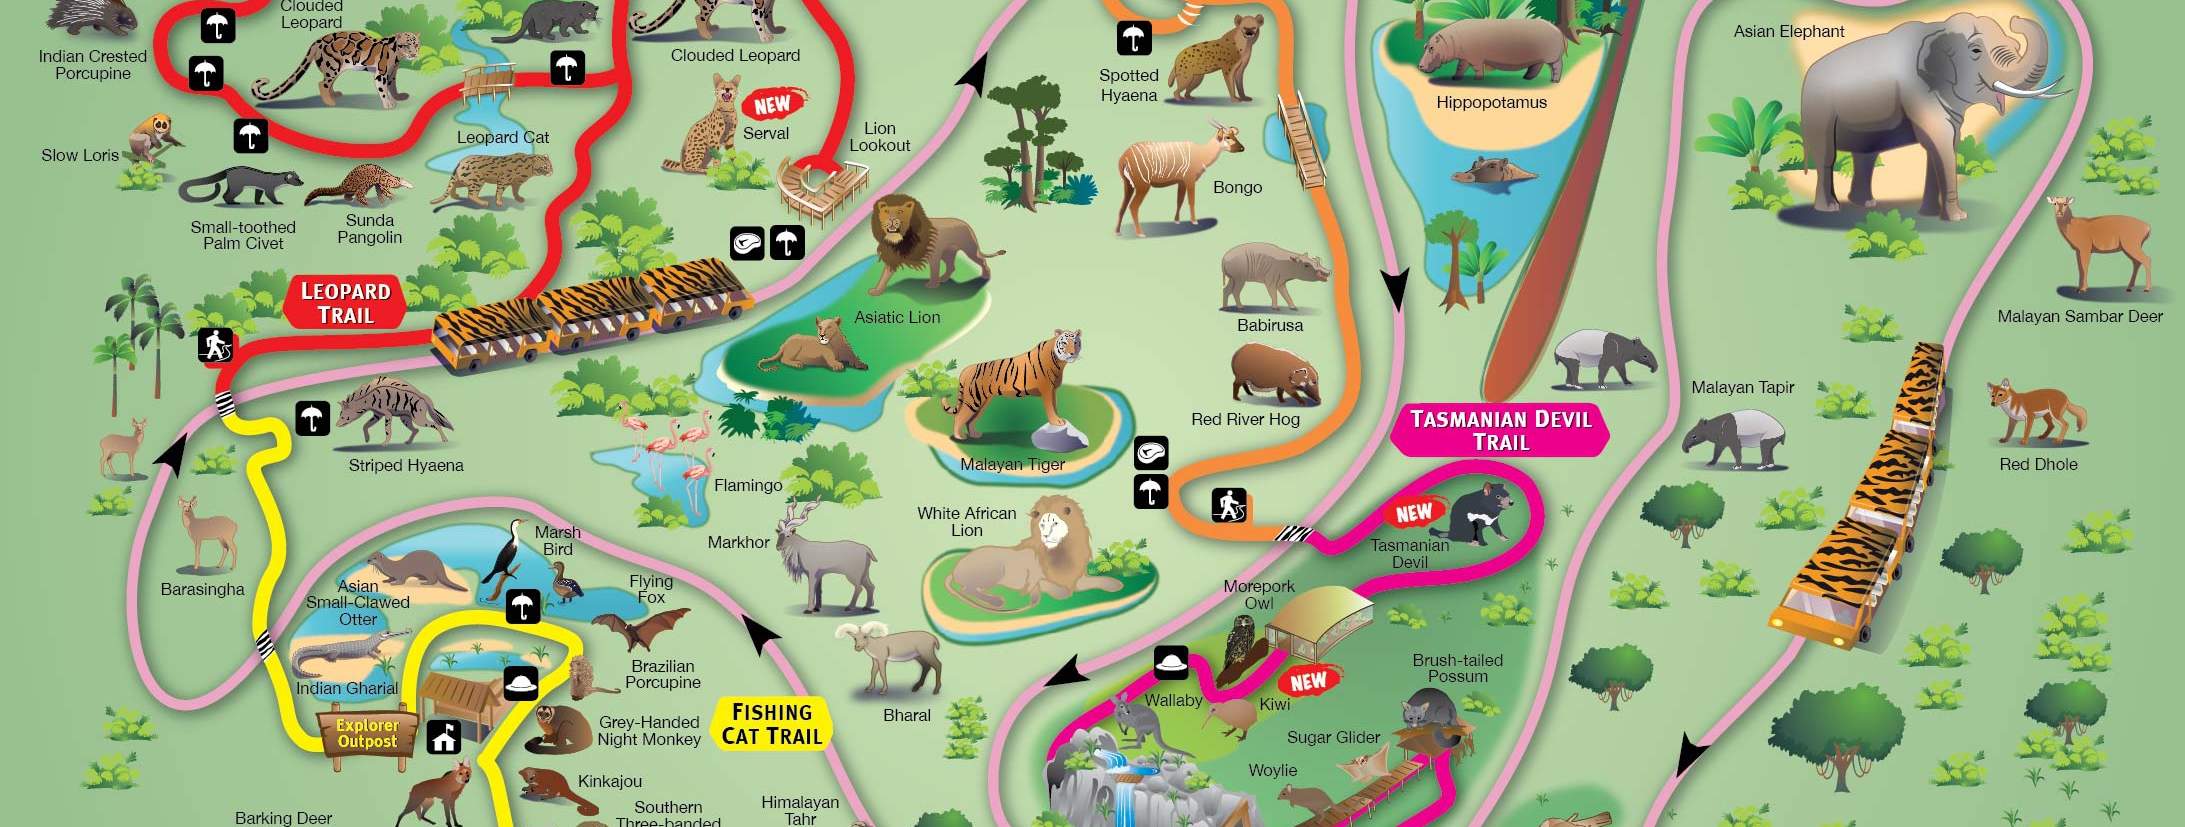 night safari map in english